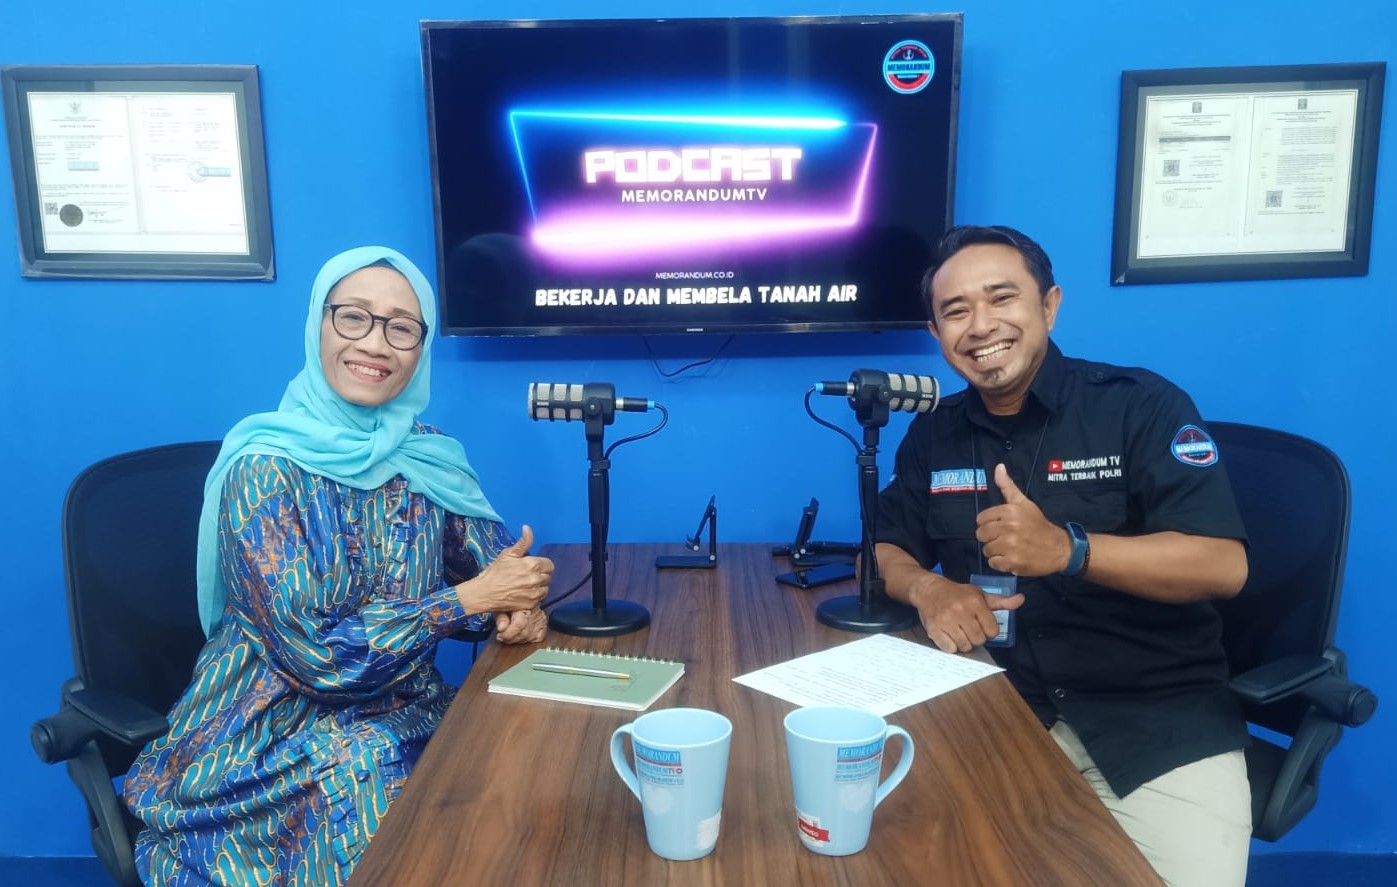 Sambut HUT Ke-54 SKH Memorandum, Profesor Dr Apt Mangestuti Agil MS Jadi Bintang Tamu di Podcast MemorandumTV